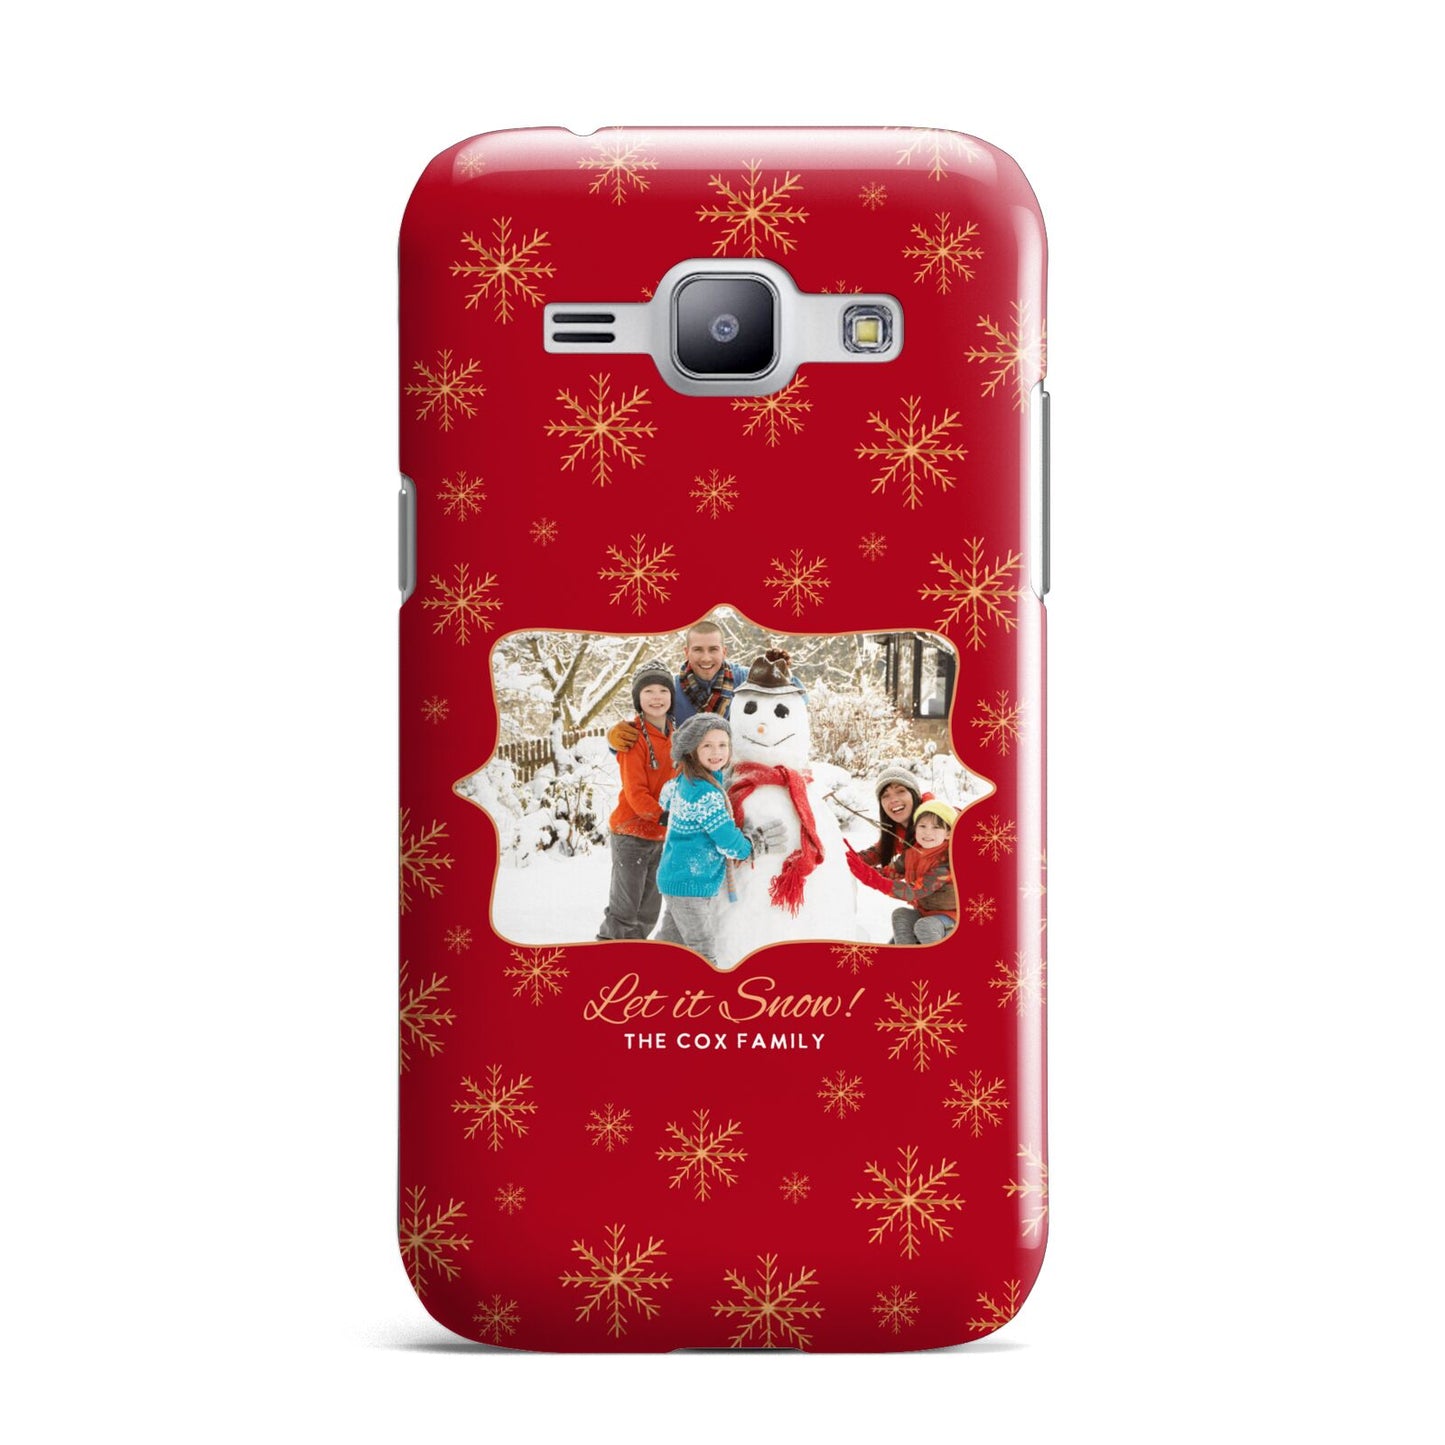 Let it Snow Christmas Photo Upload Samsung Galaxy J1 2015 Case